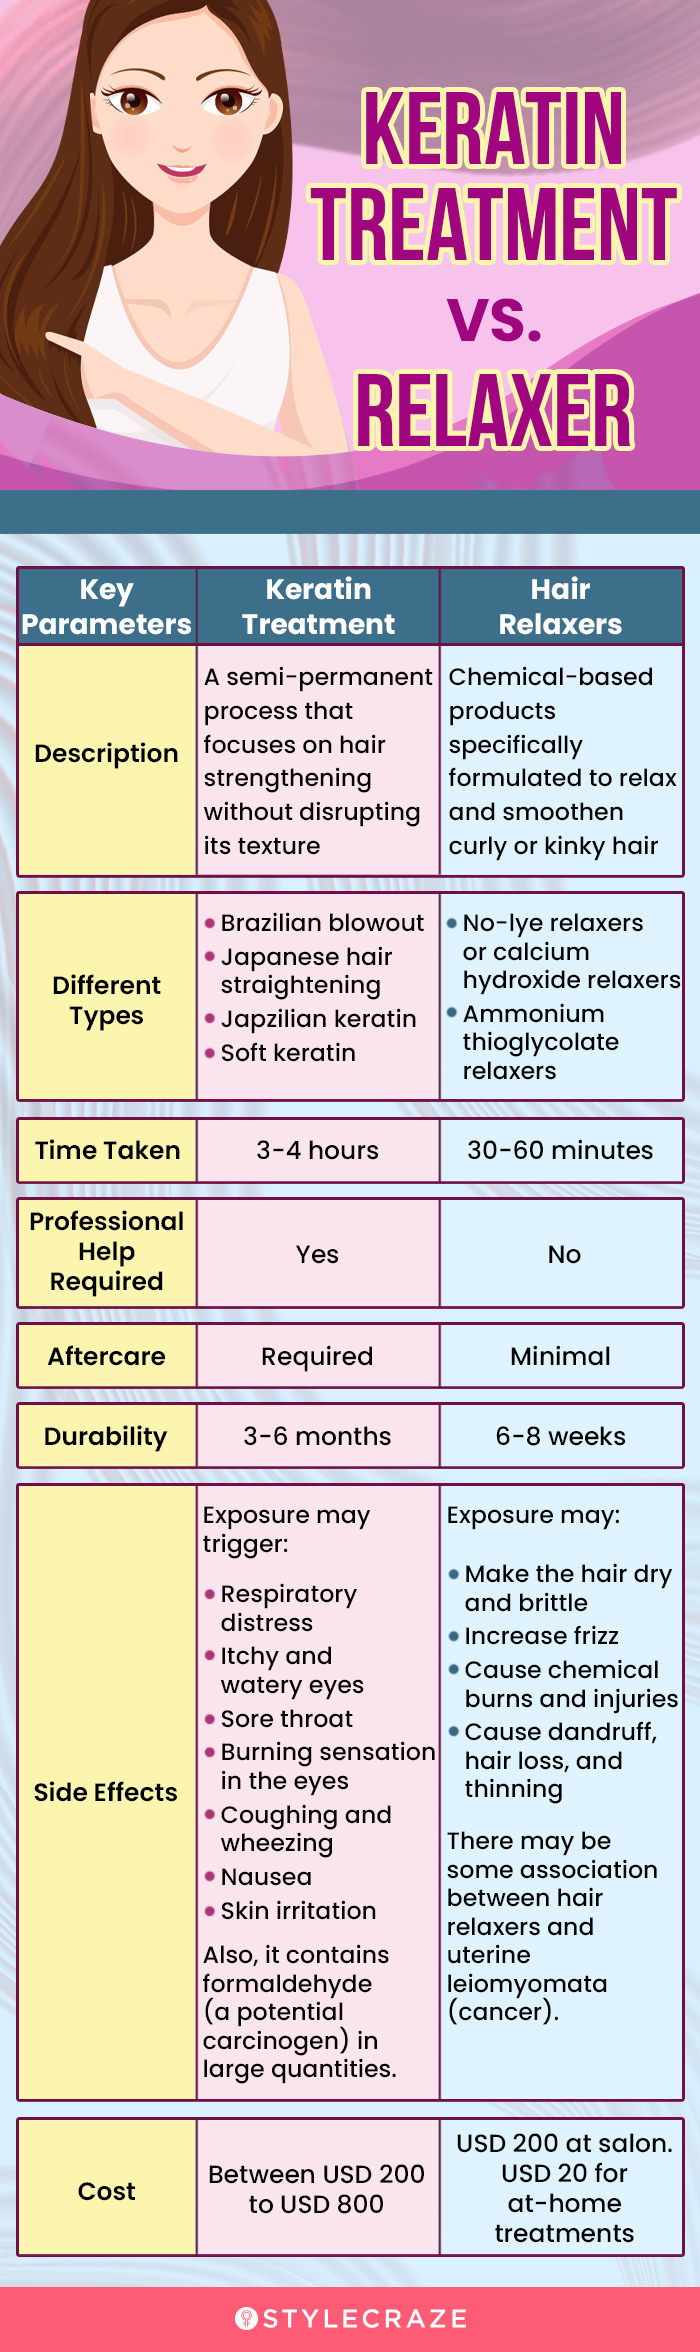 keratin treatment vs. relaxer (infographic)